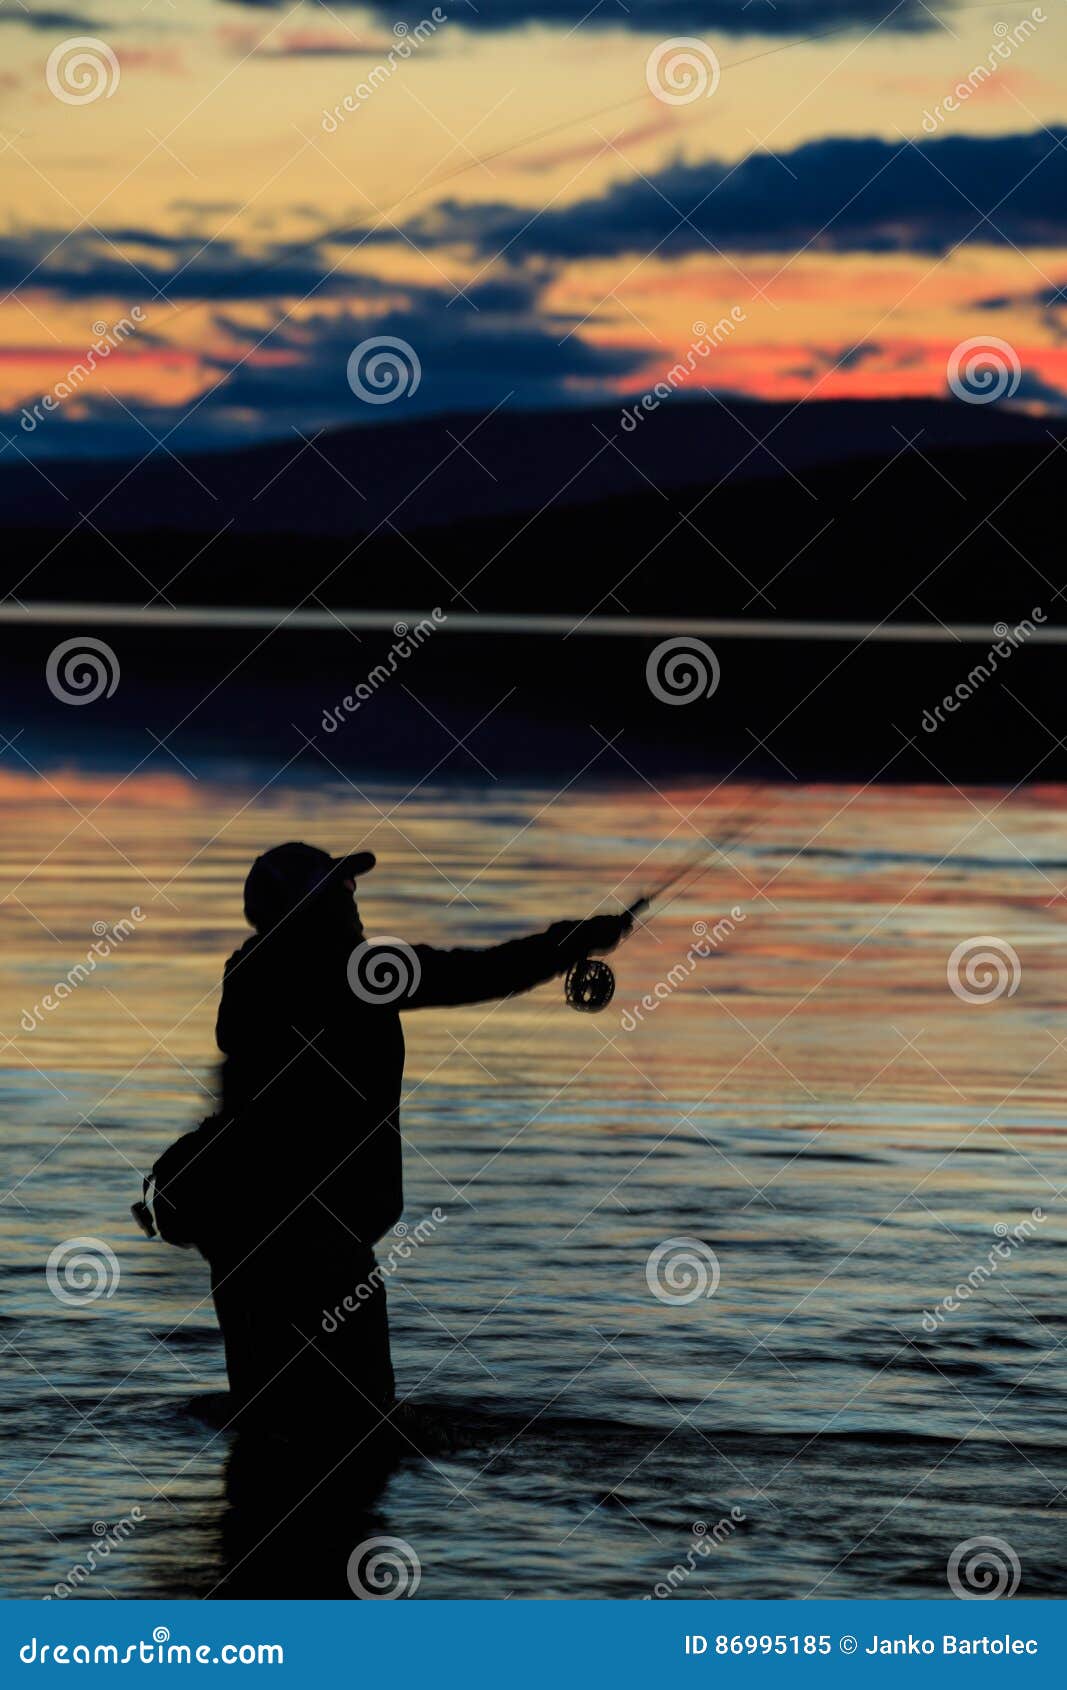 Magic sunset stock image. Image of contemplate, fishing - 86995185